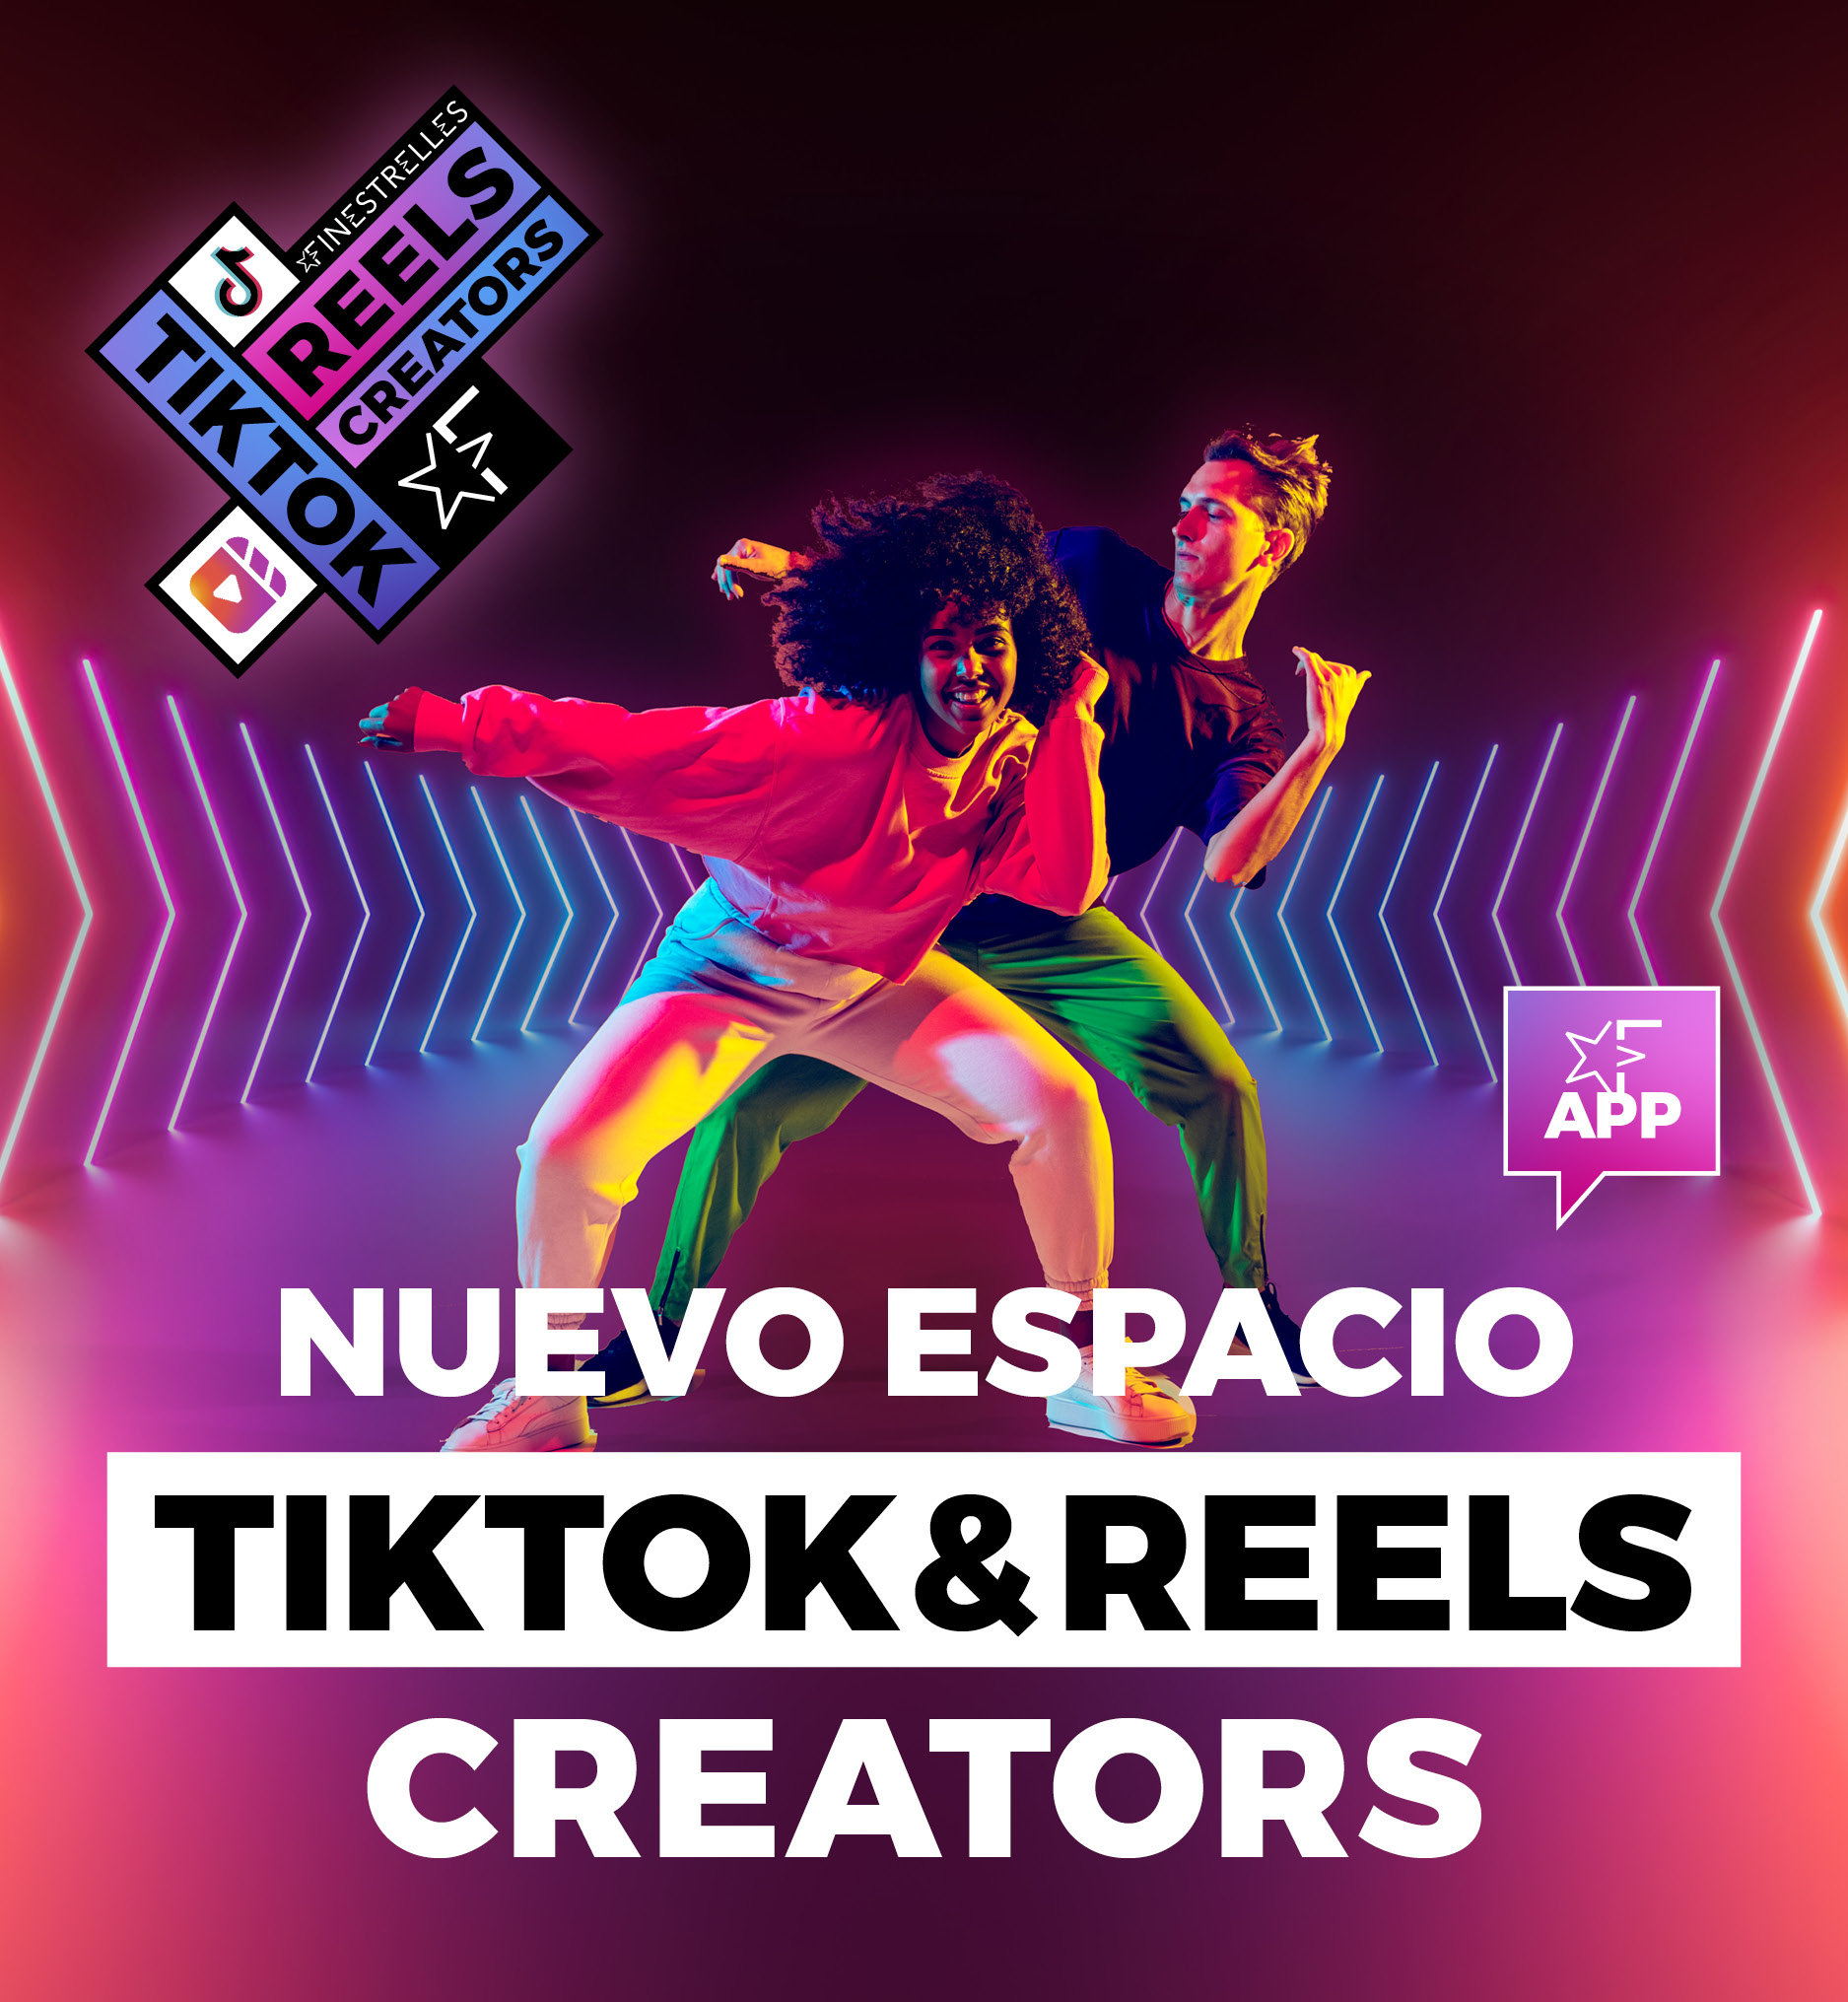 TikTok & Reels Creators